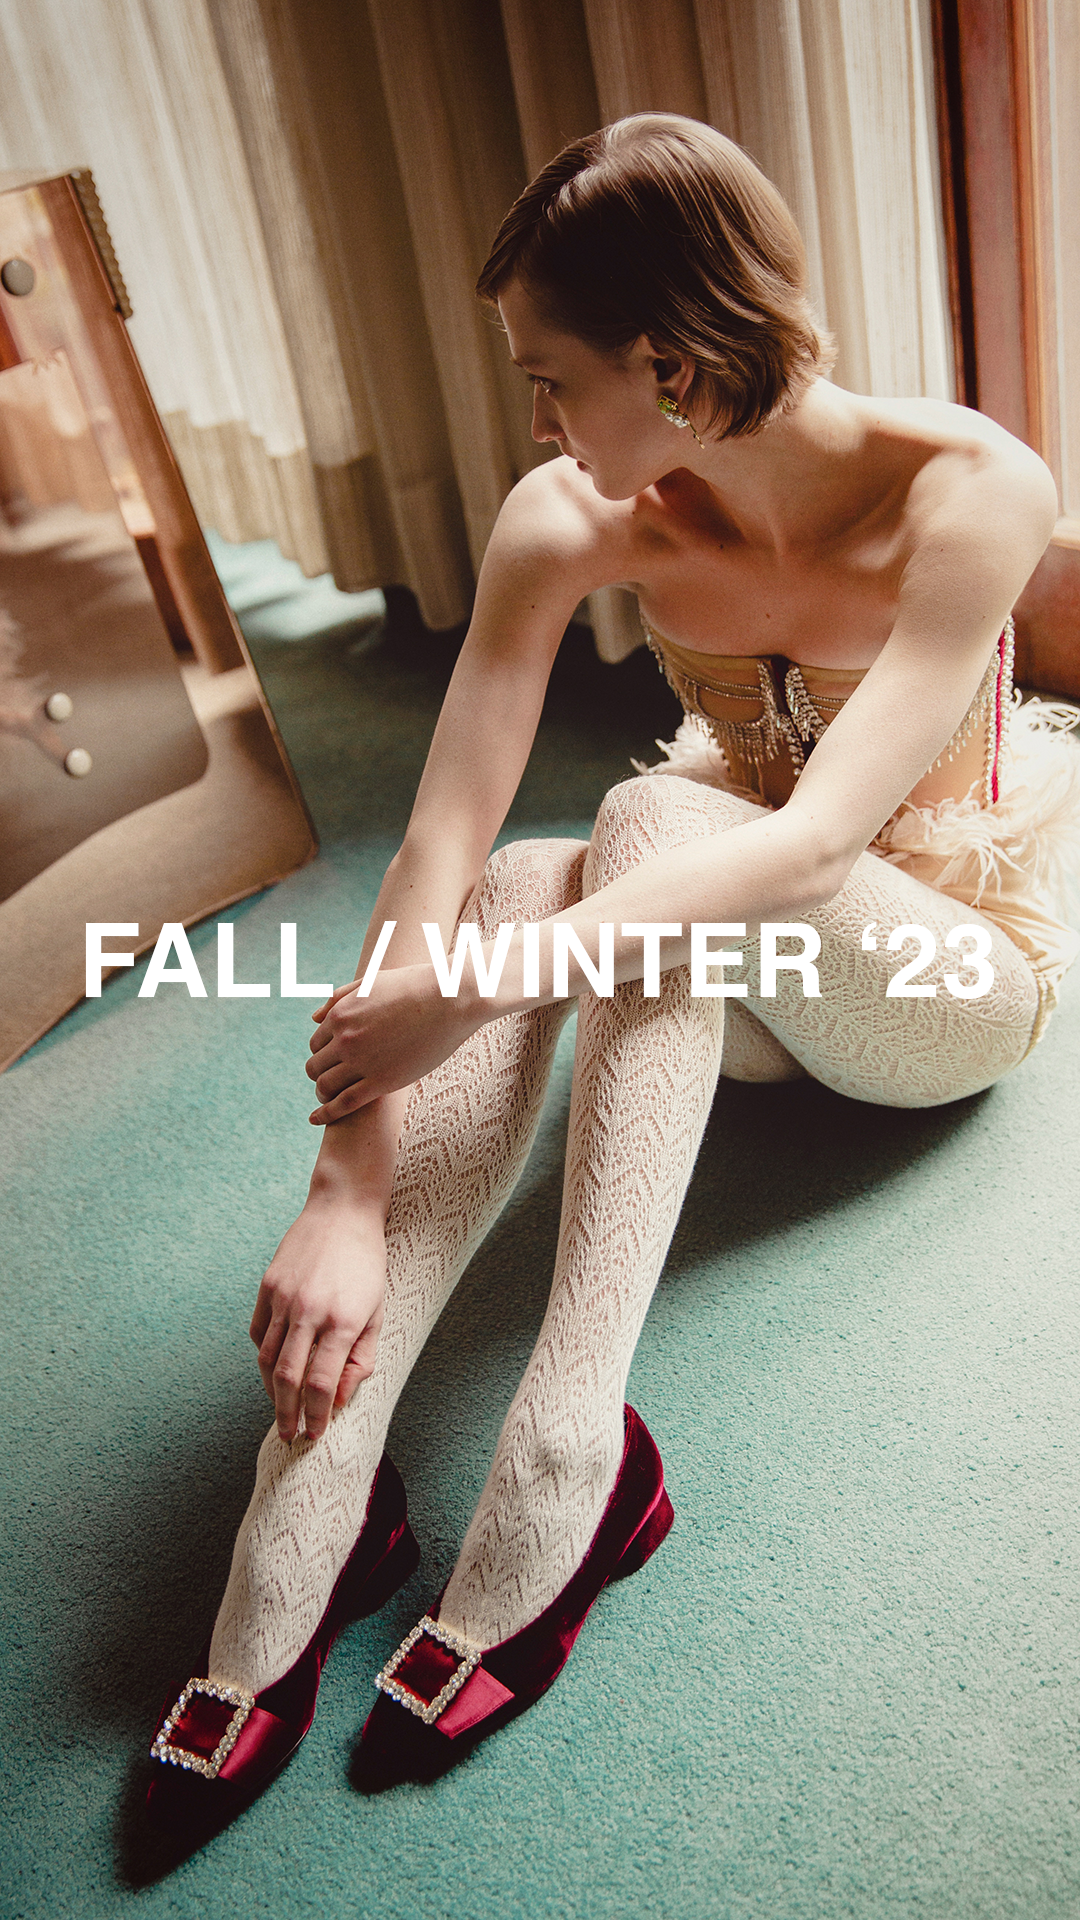 Fall/winter 23 